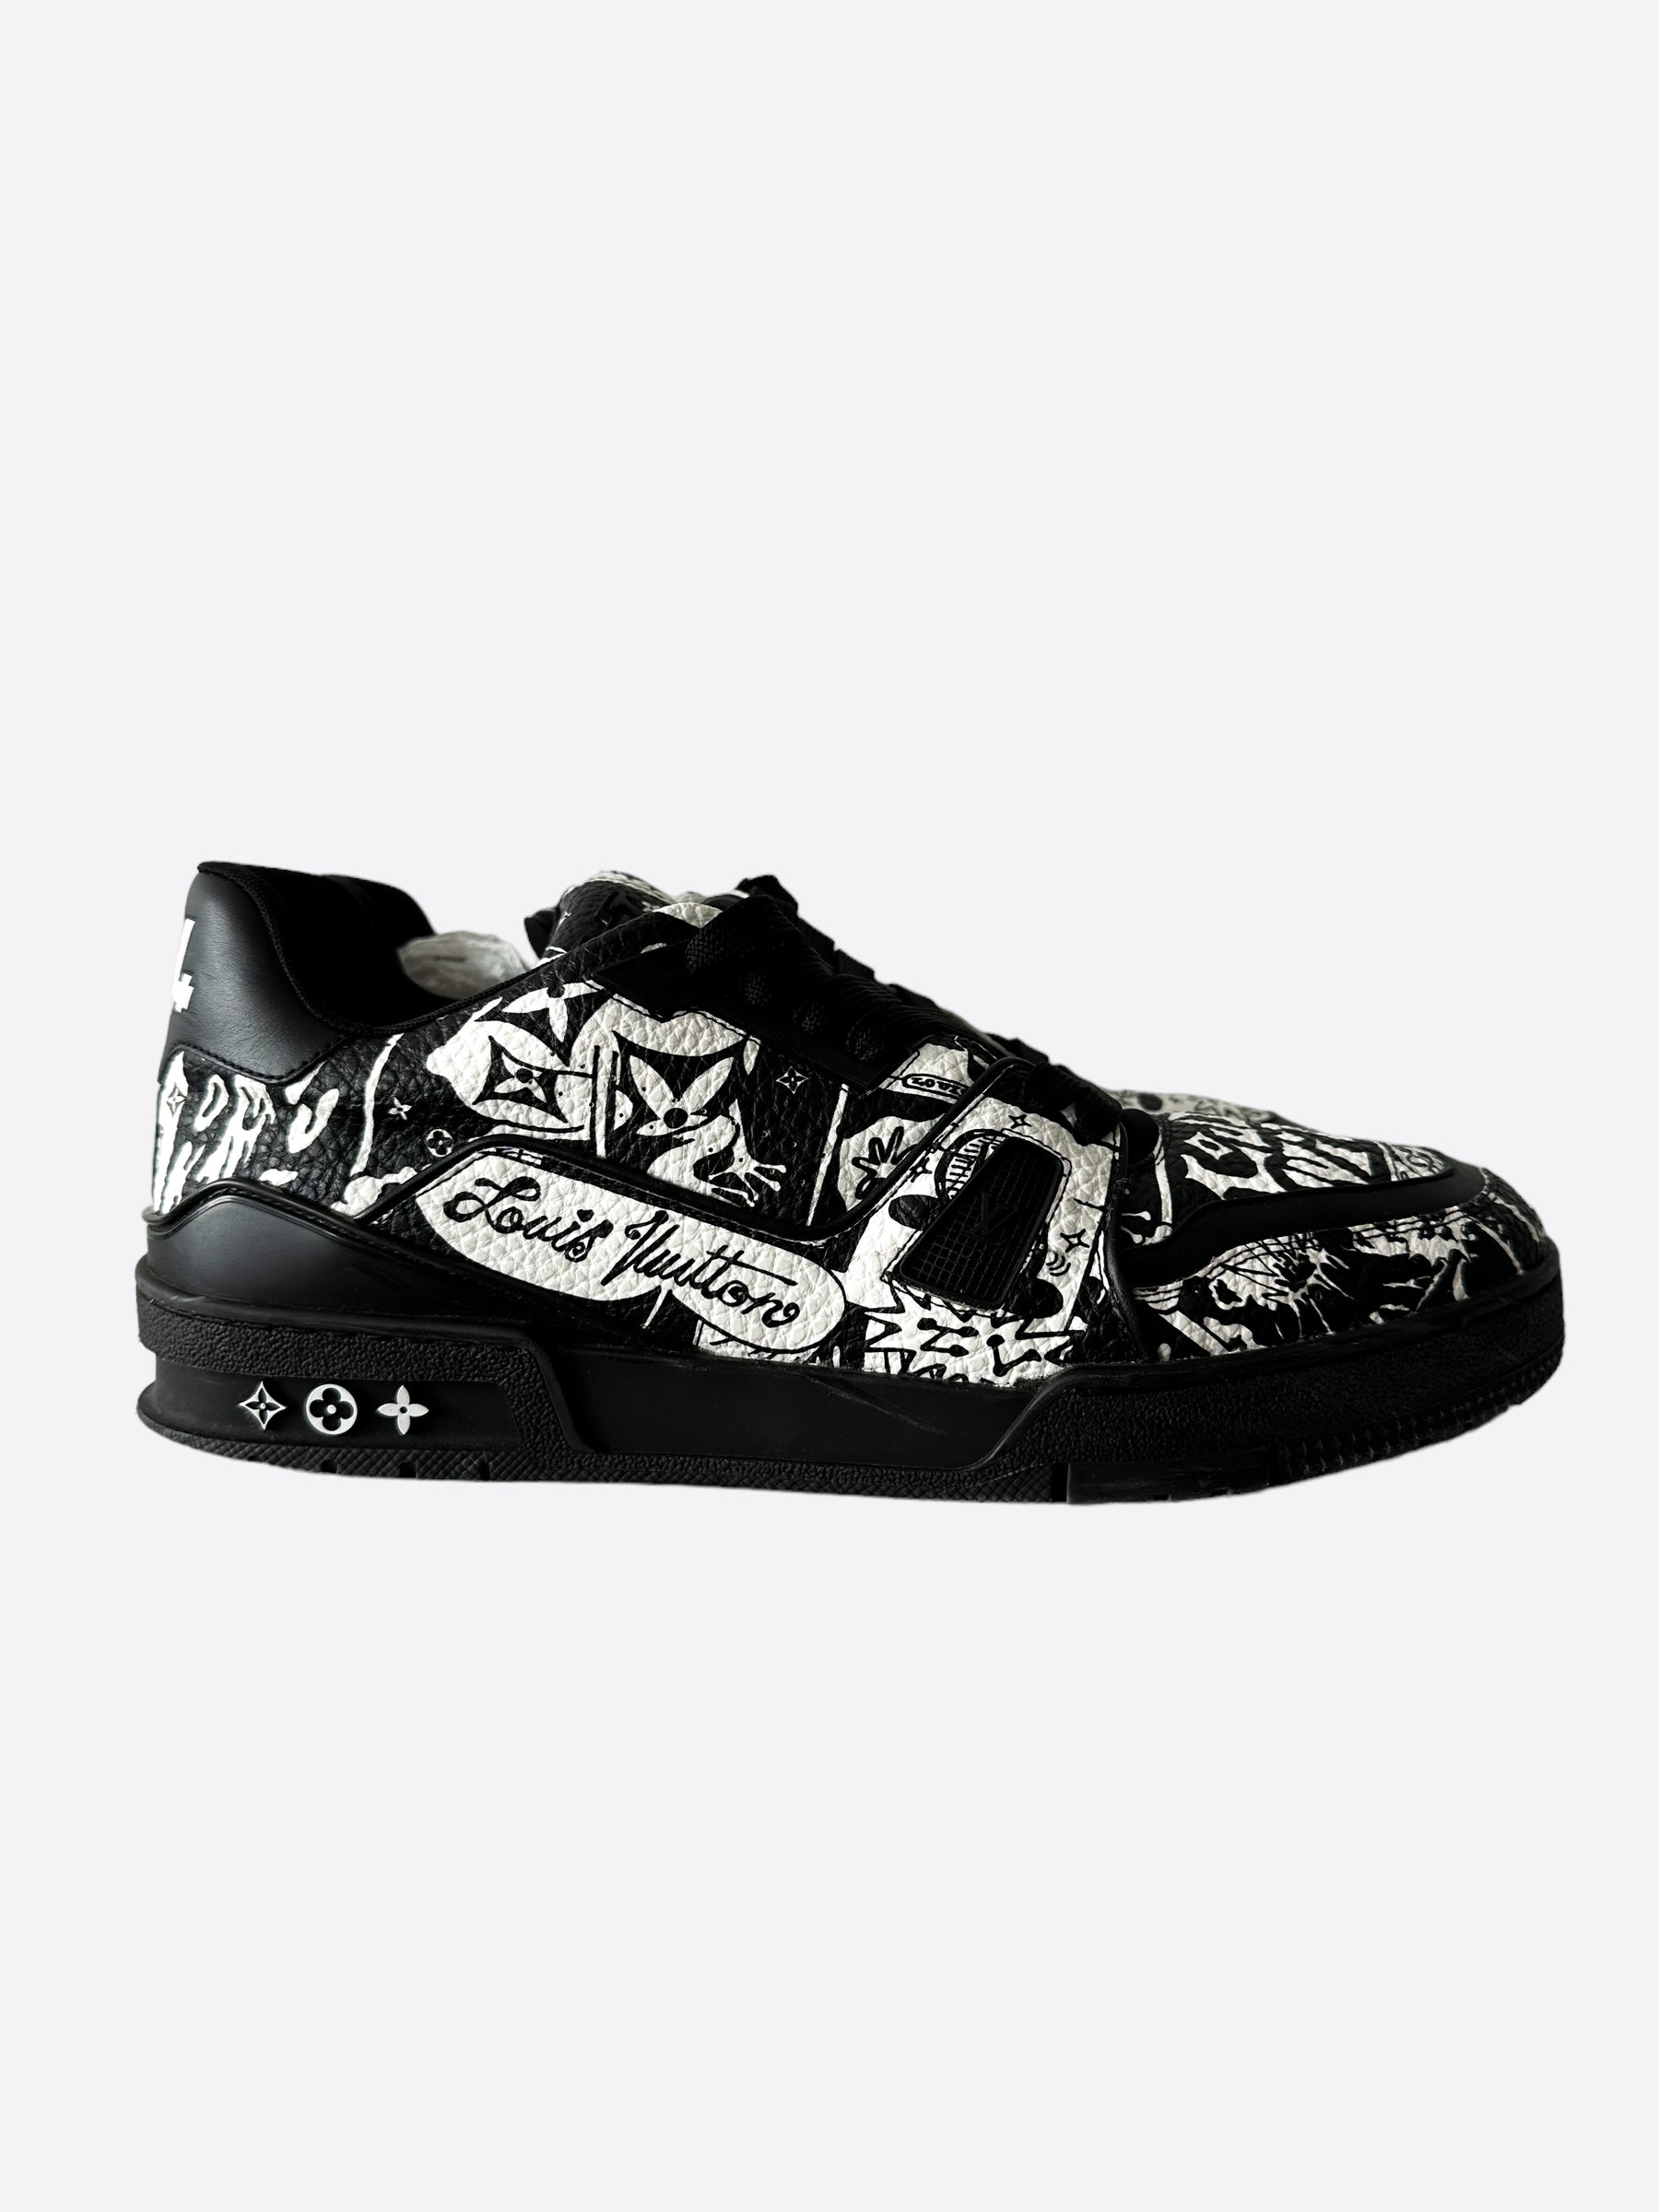 Louis Vuitton, Shoes, Louis Vuitton Graffiti Sneakers